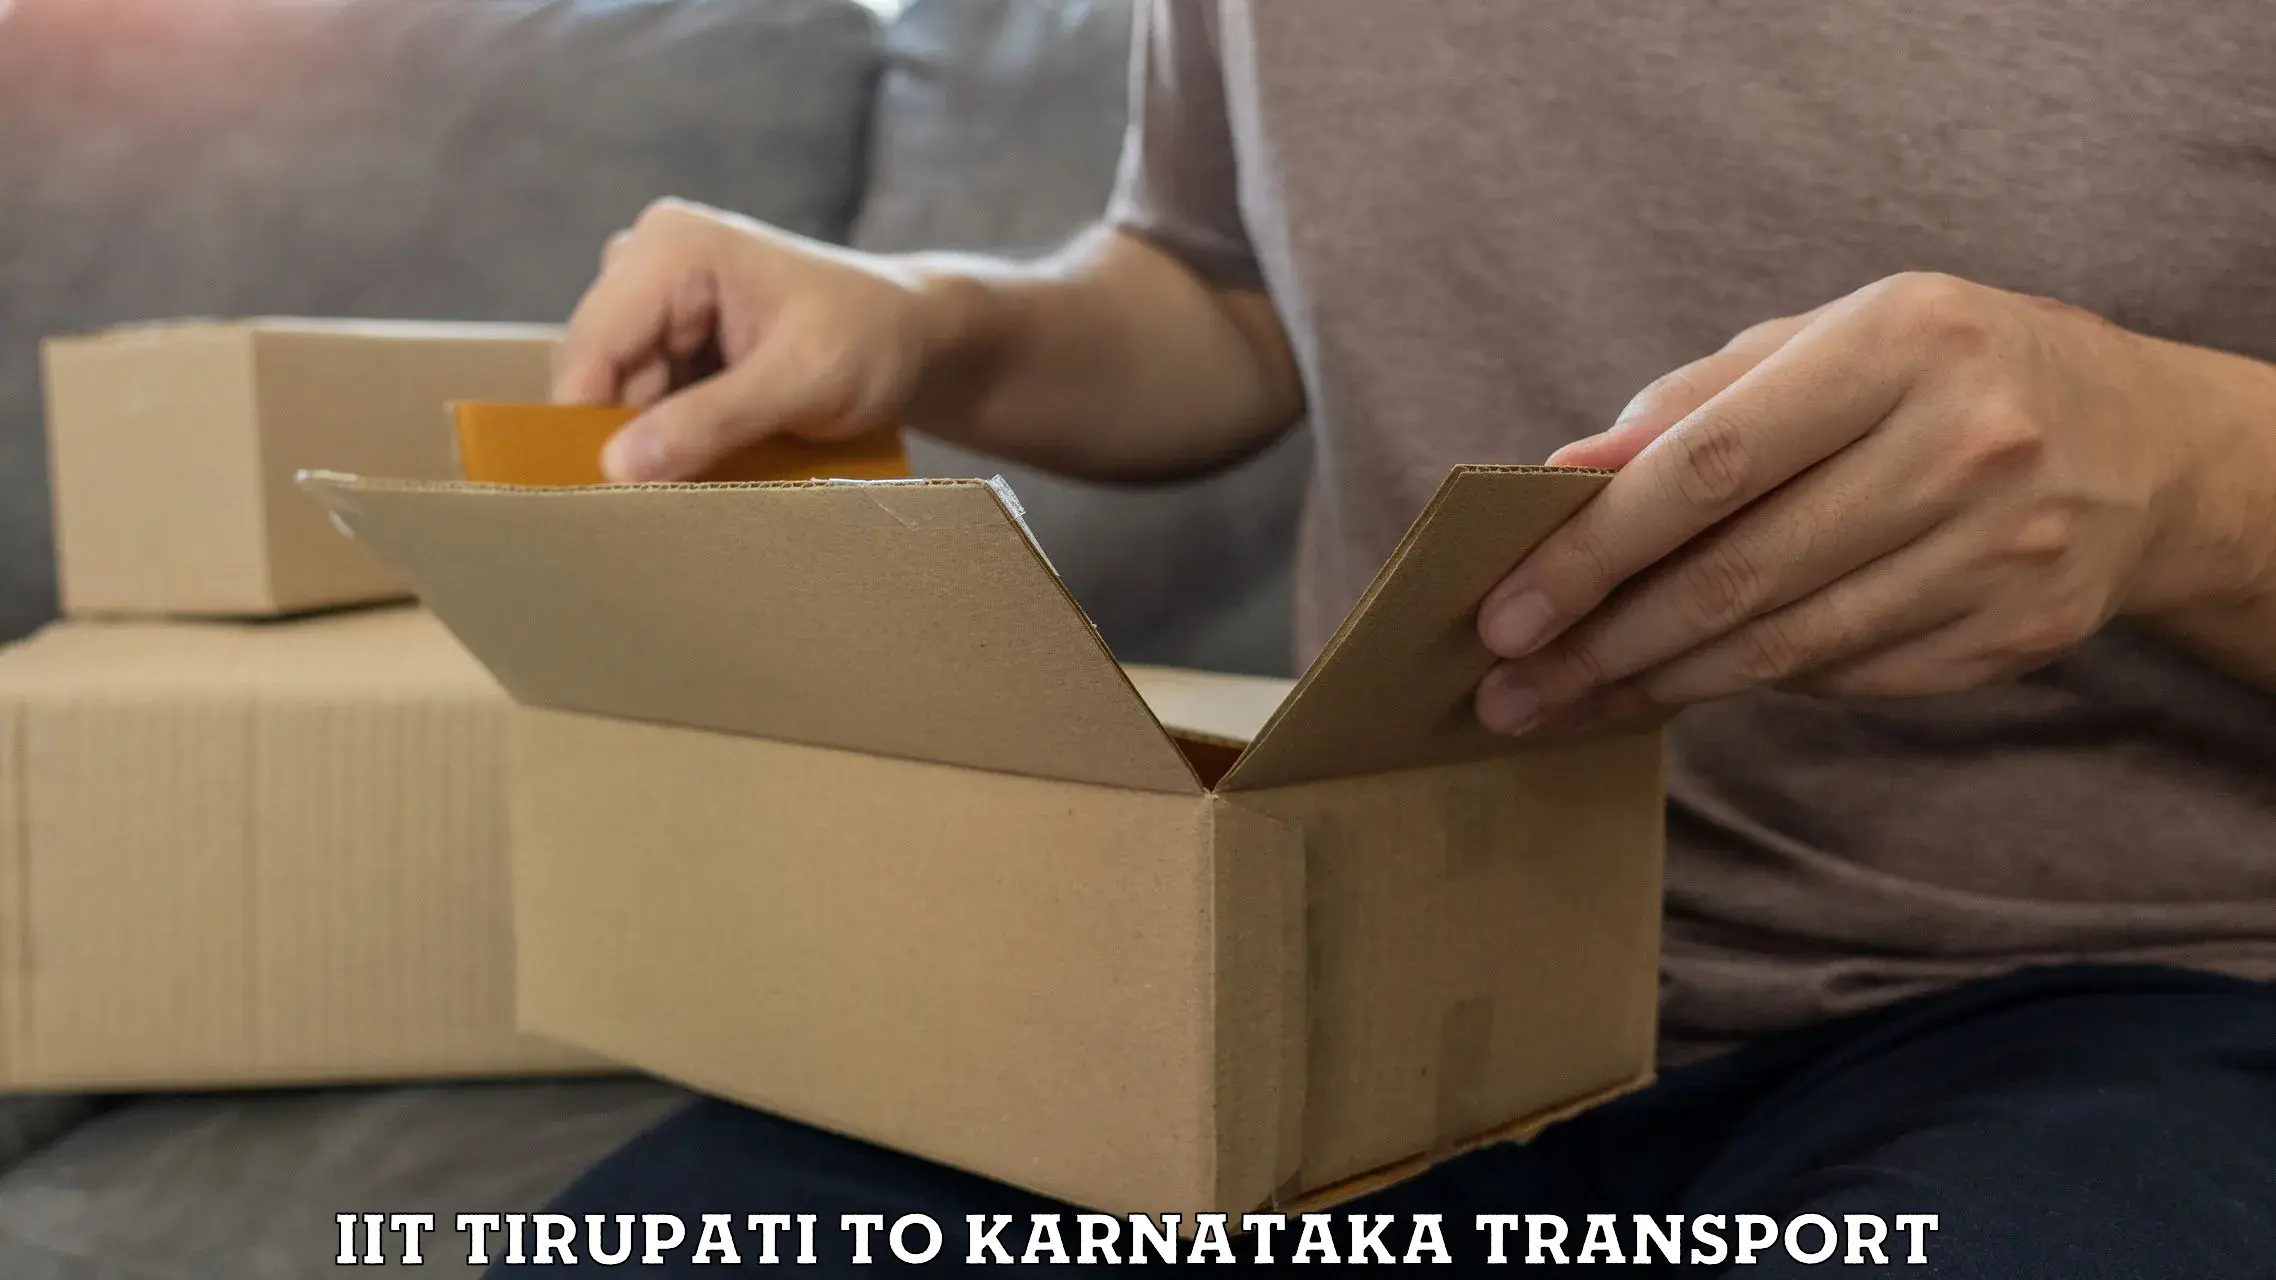 Transport bike from one state to another IIT Tirupati to Karnataka